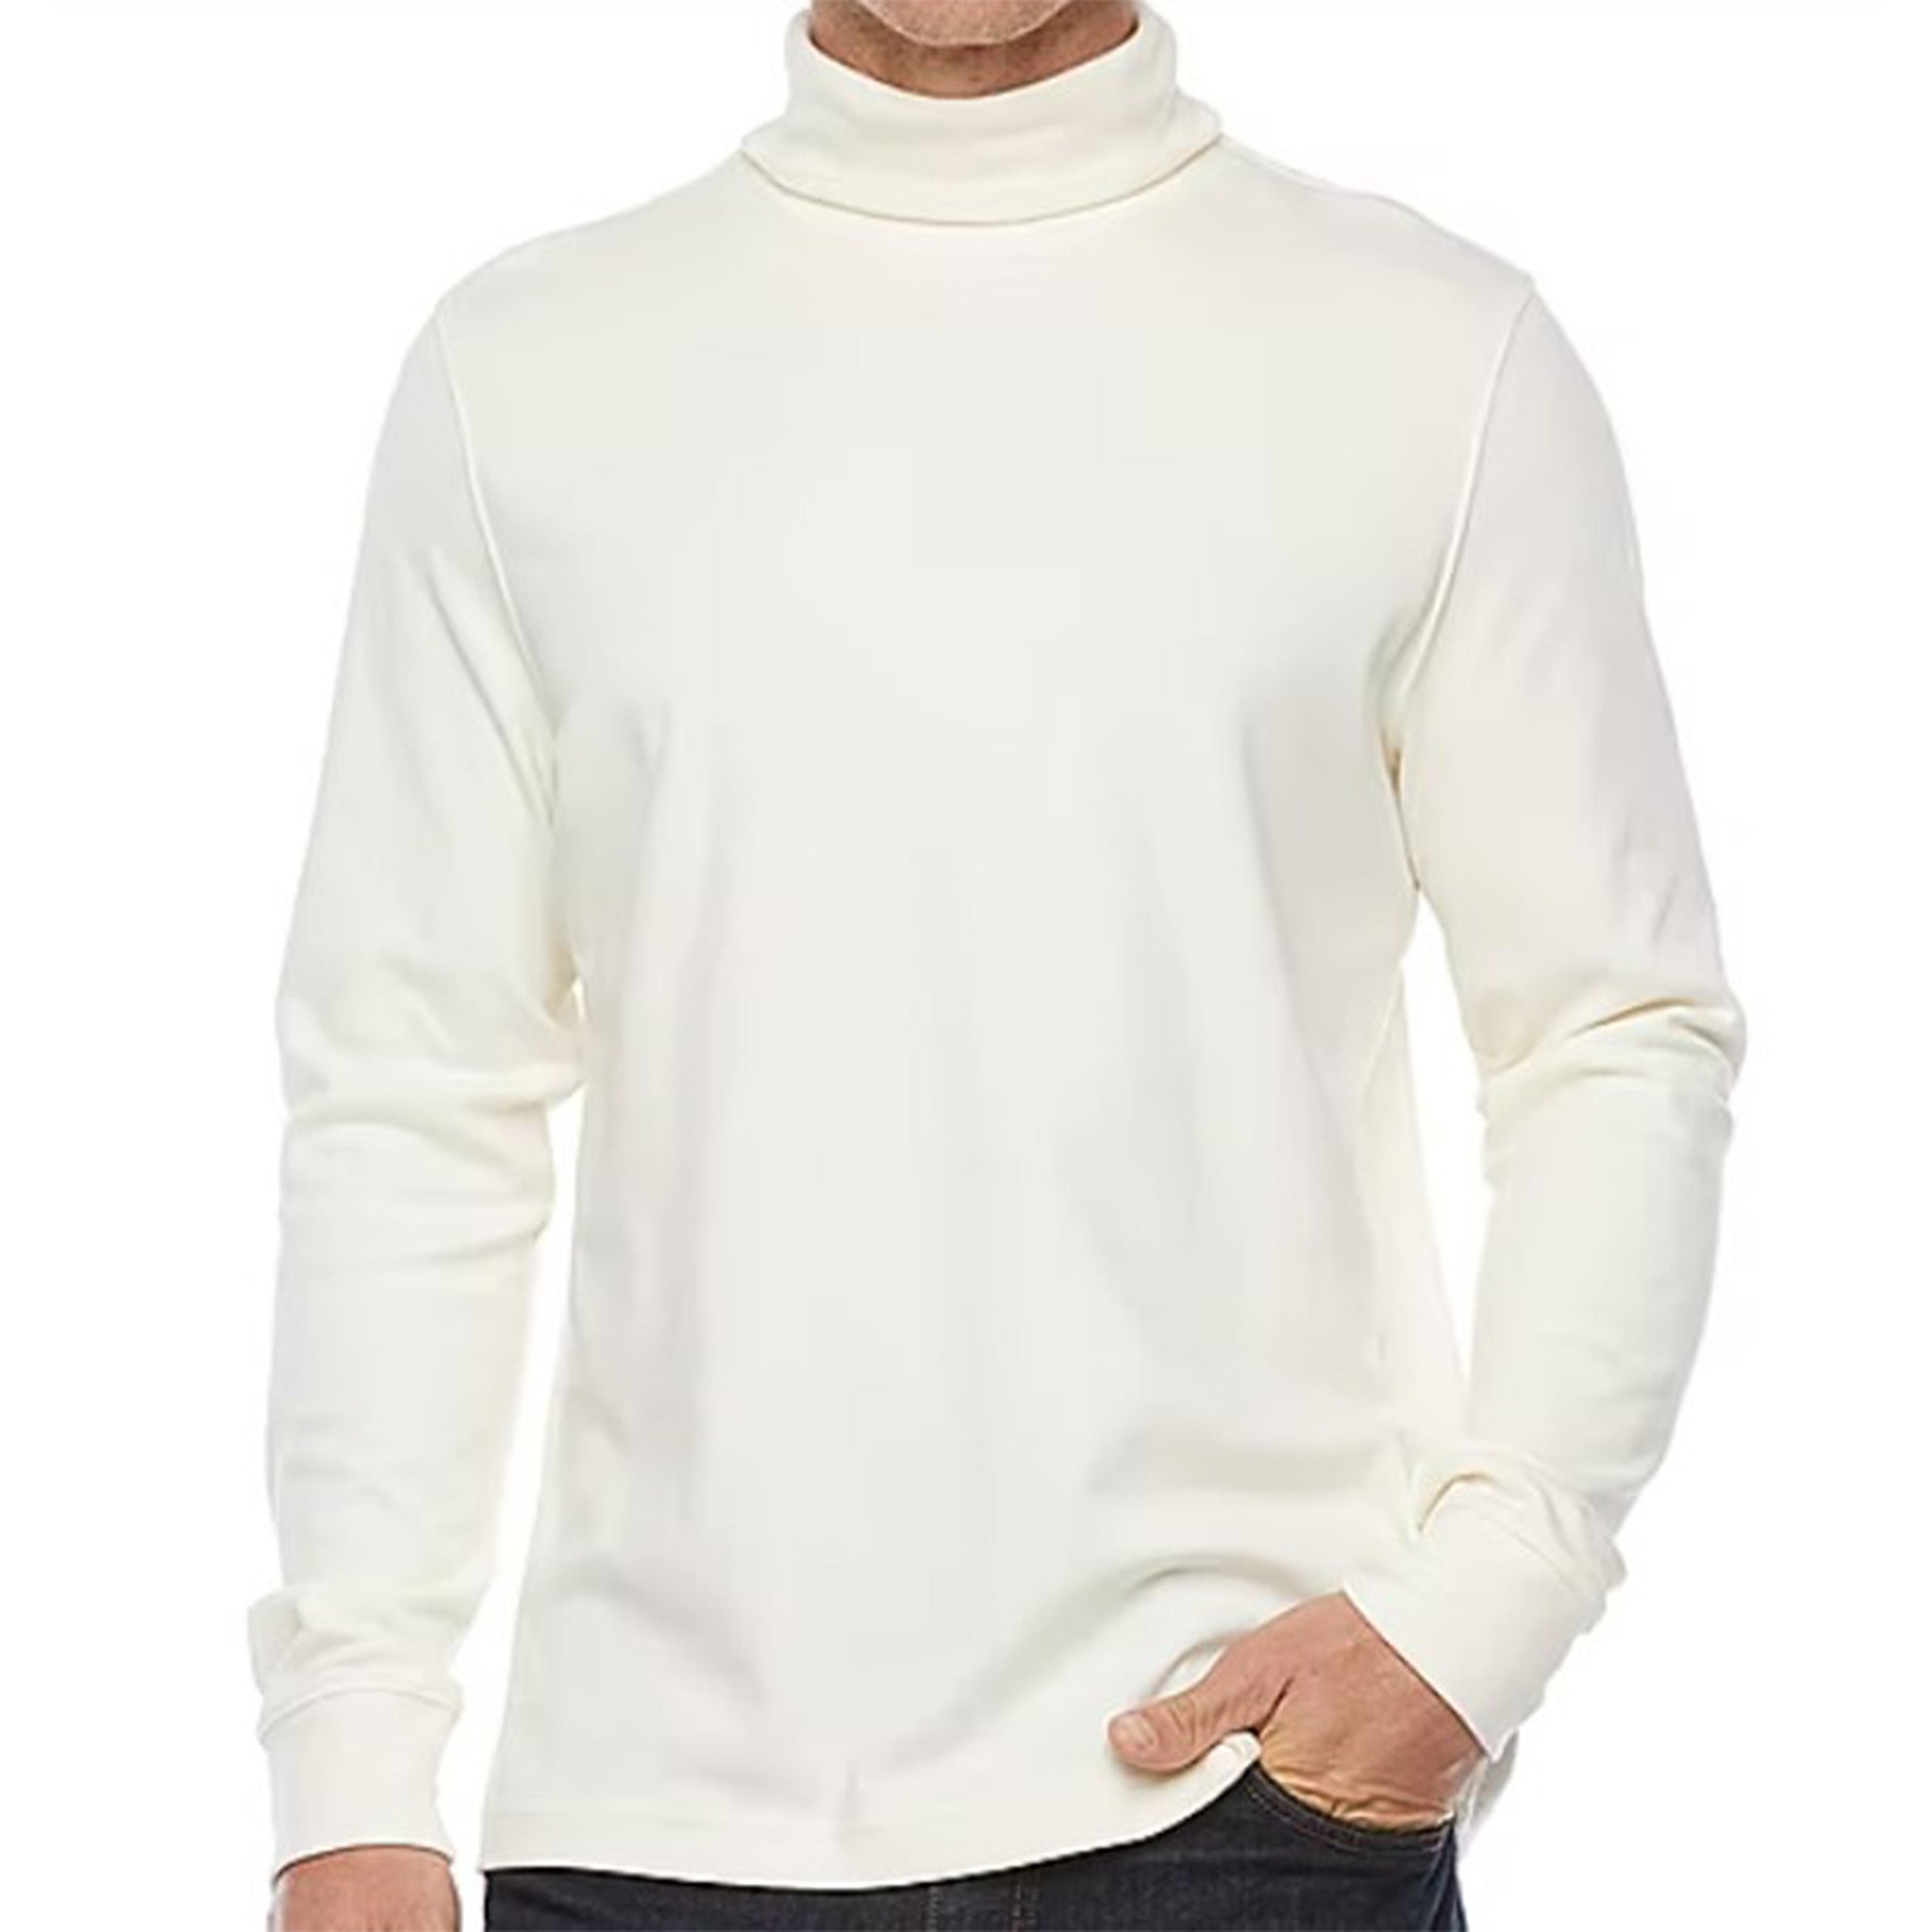 Men's Ivory Turtle Neck Sweater